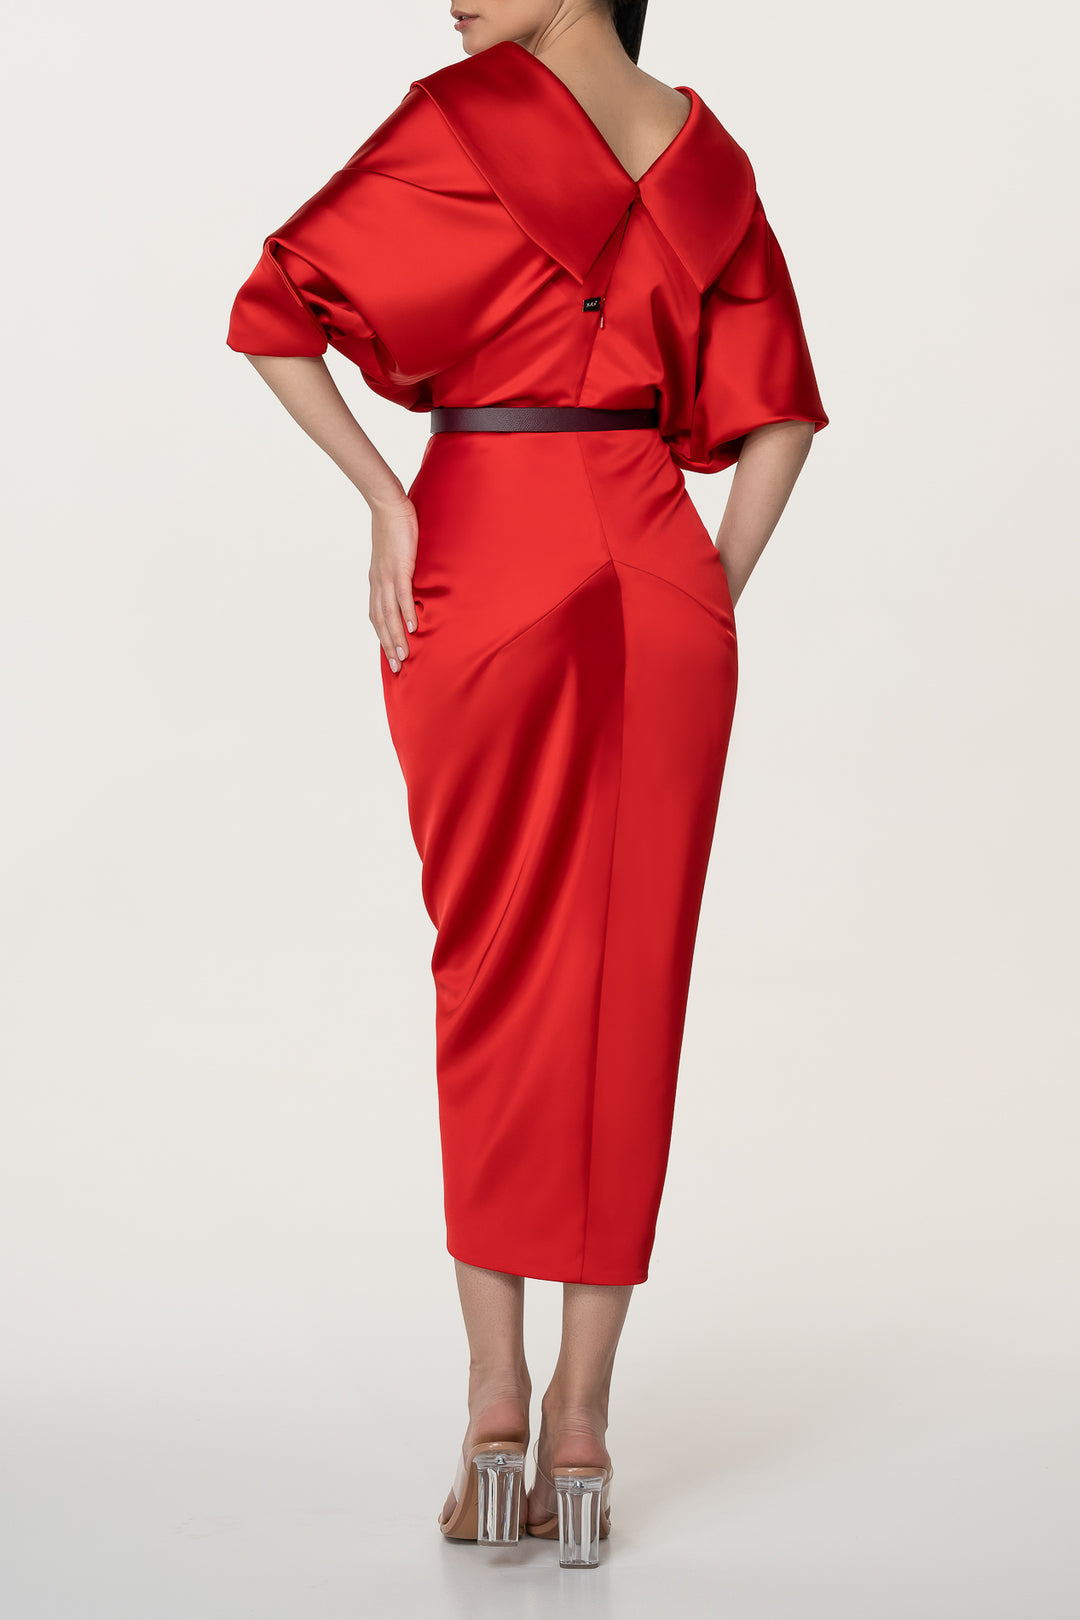 Angelina Midi Hot Red Satin Dress